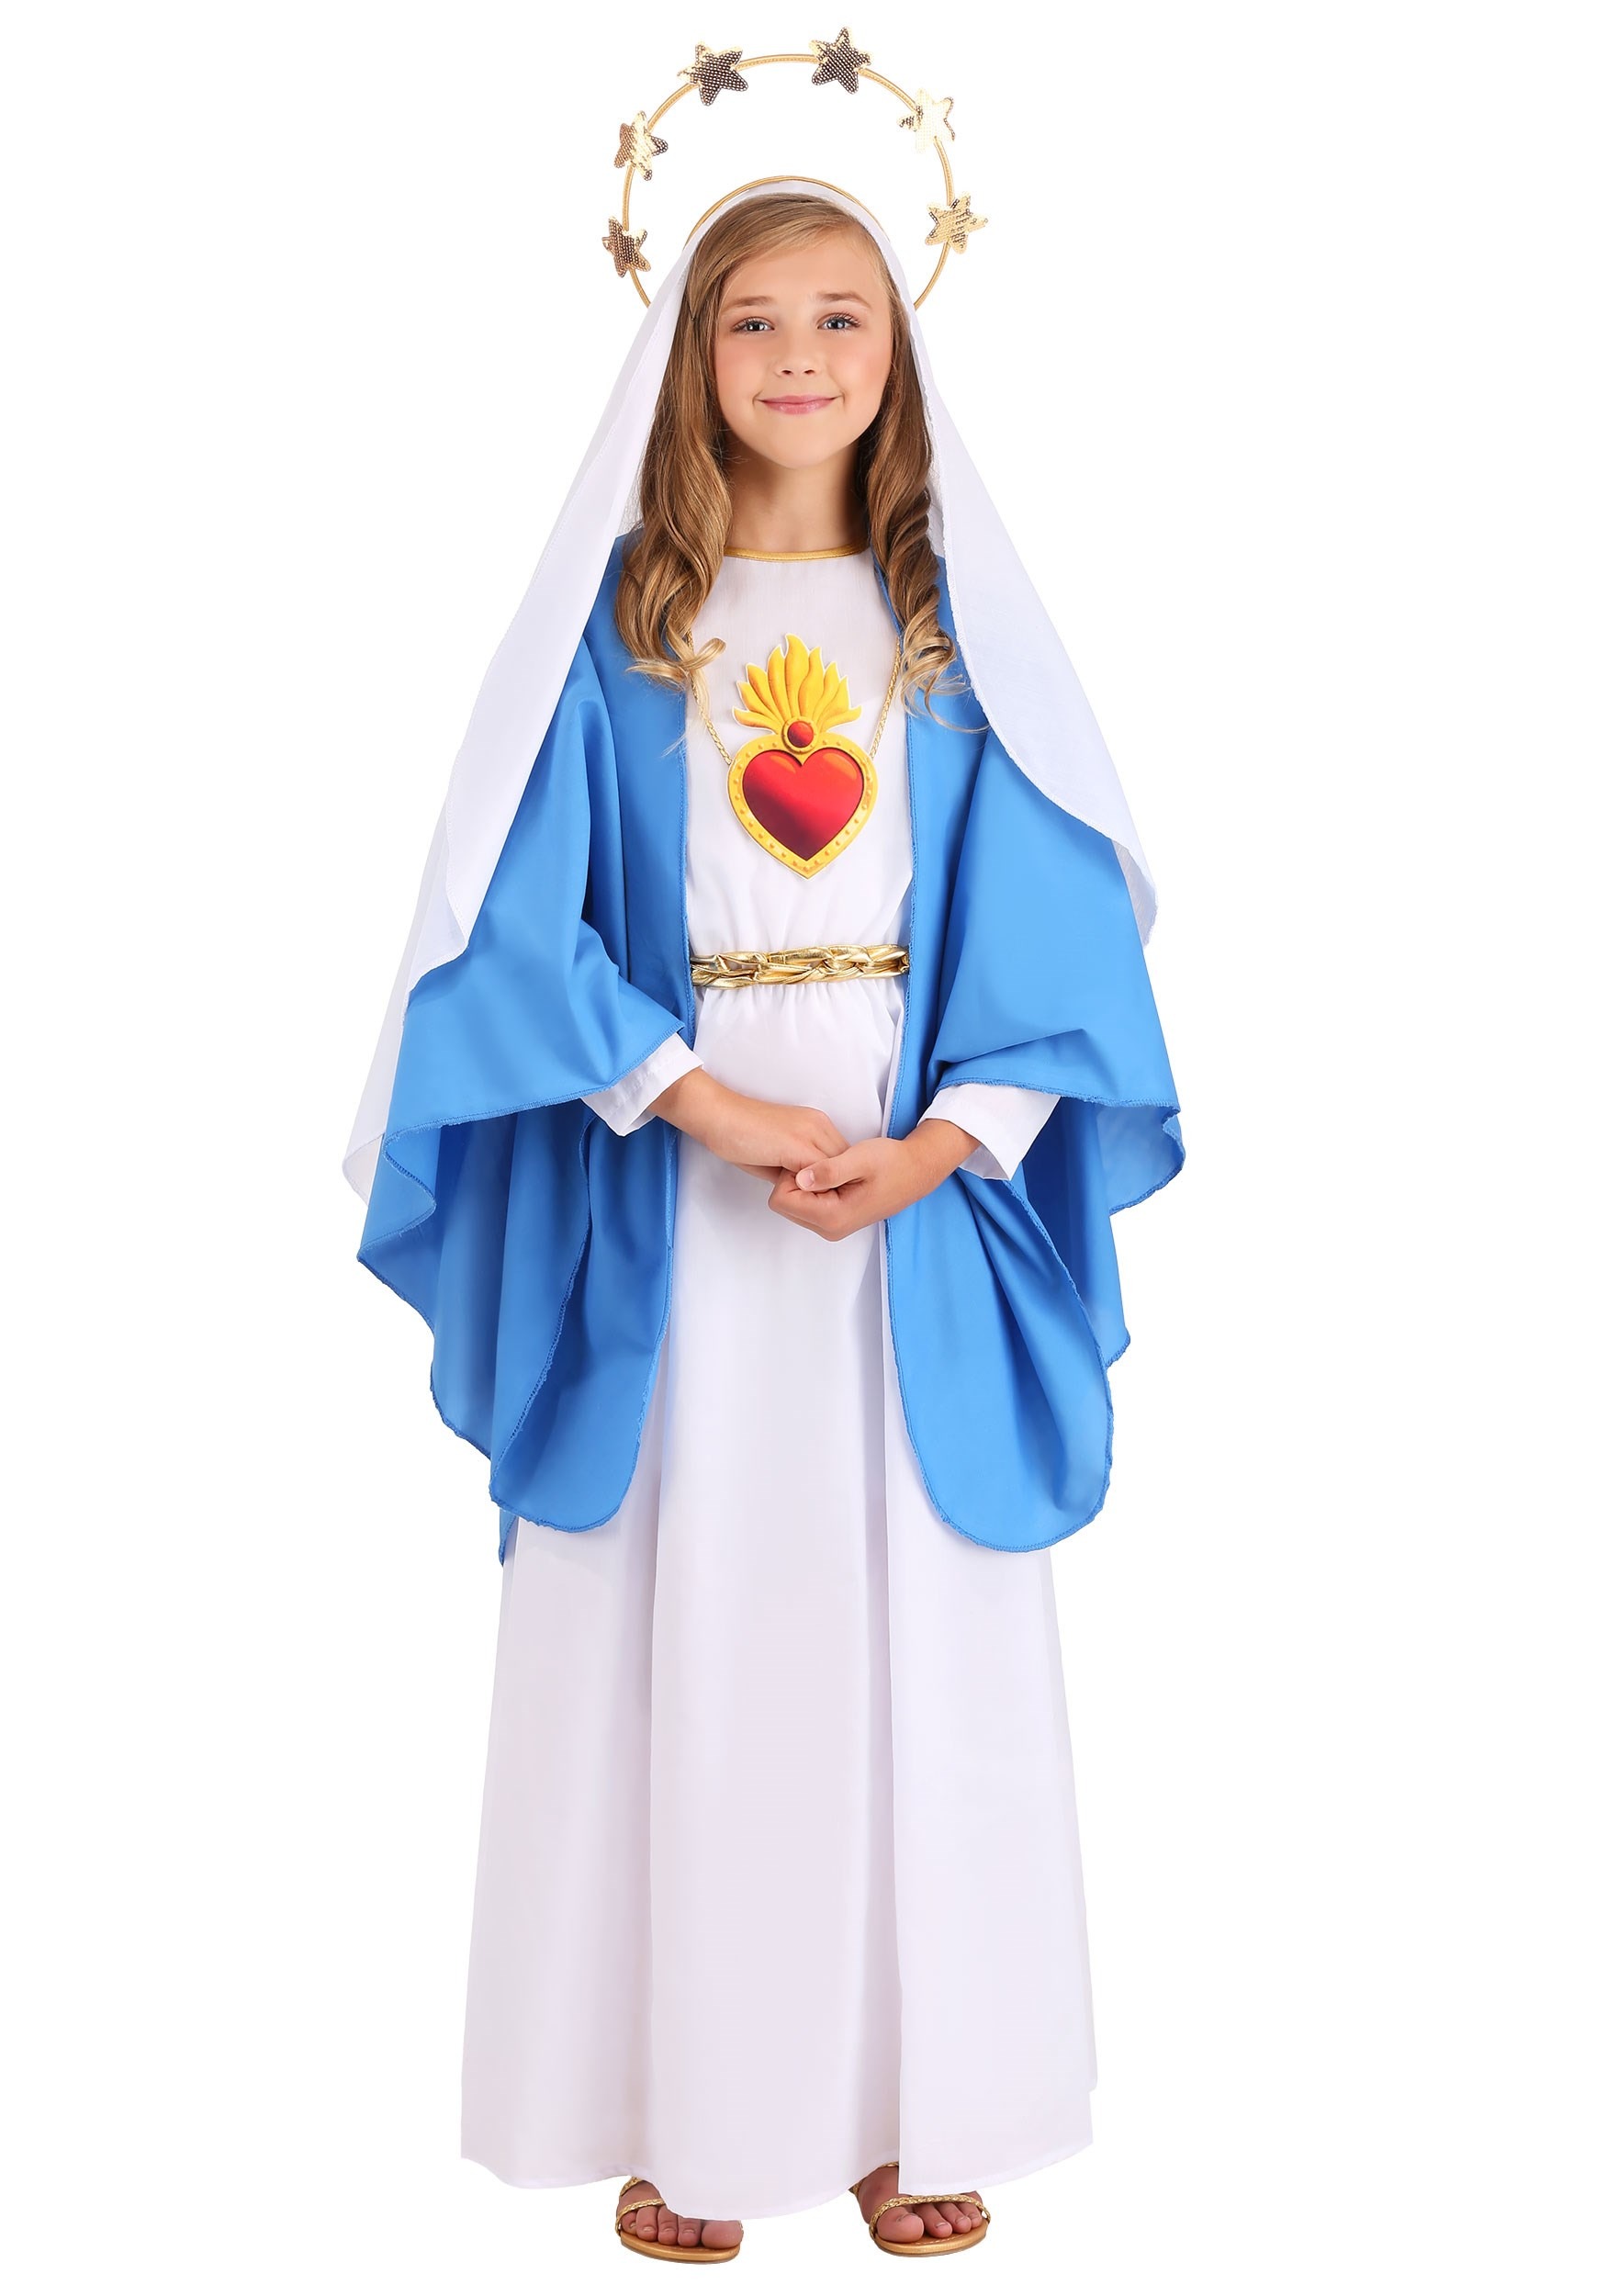 Photos - Fancy Dress MARY FUN Costumes Nativity  Girl's Costume Blue/White FUN0918CH 